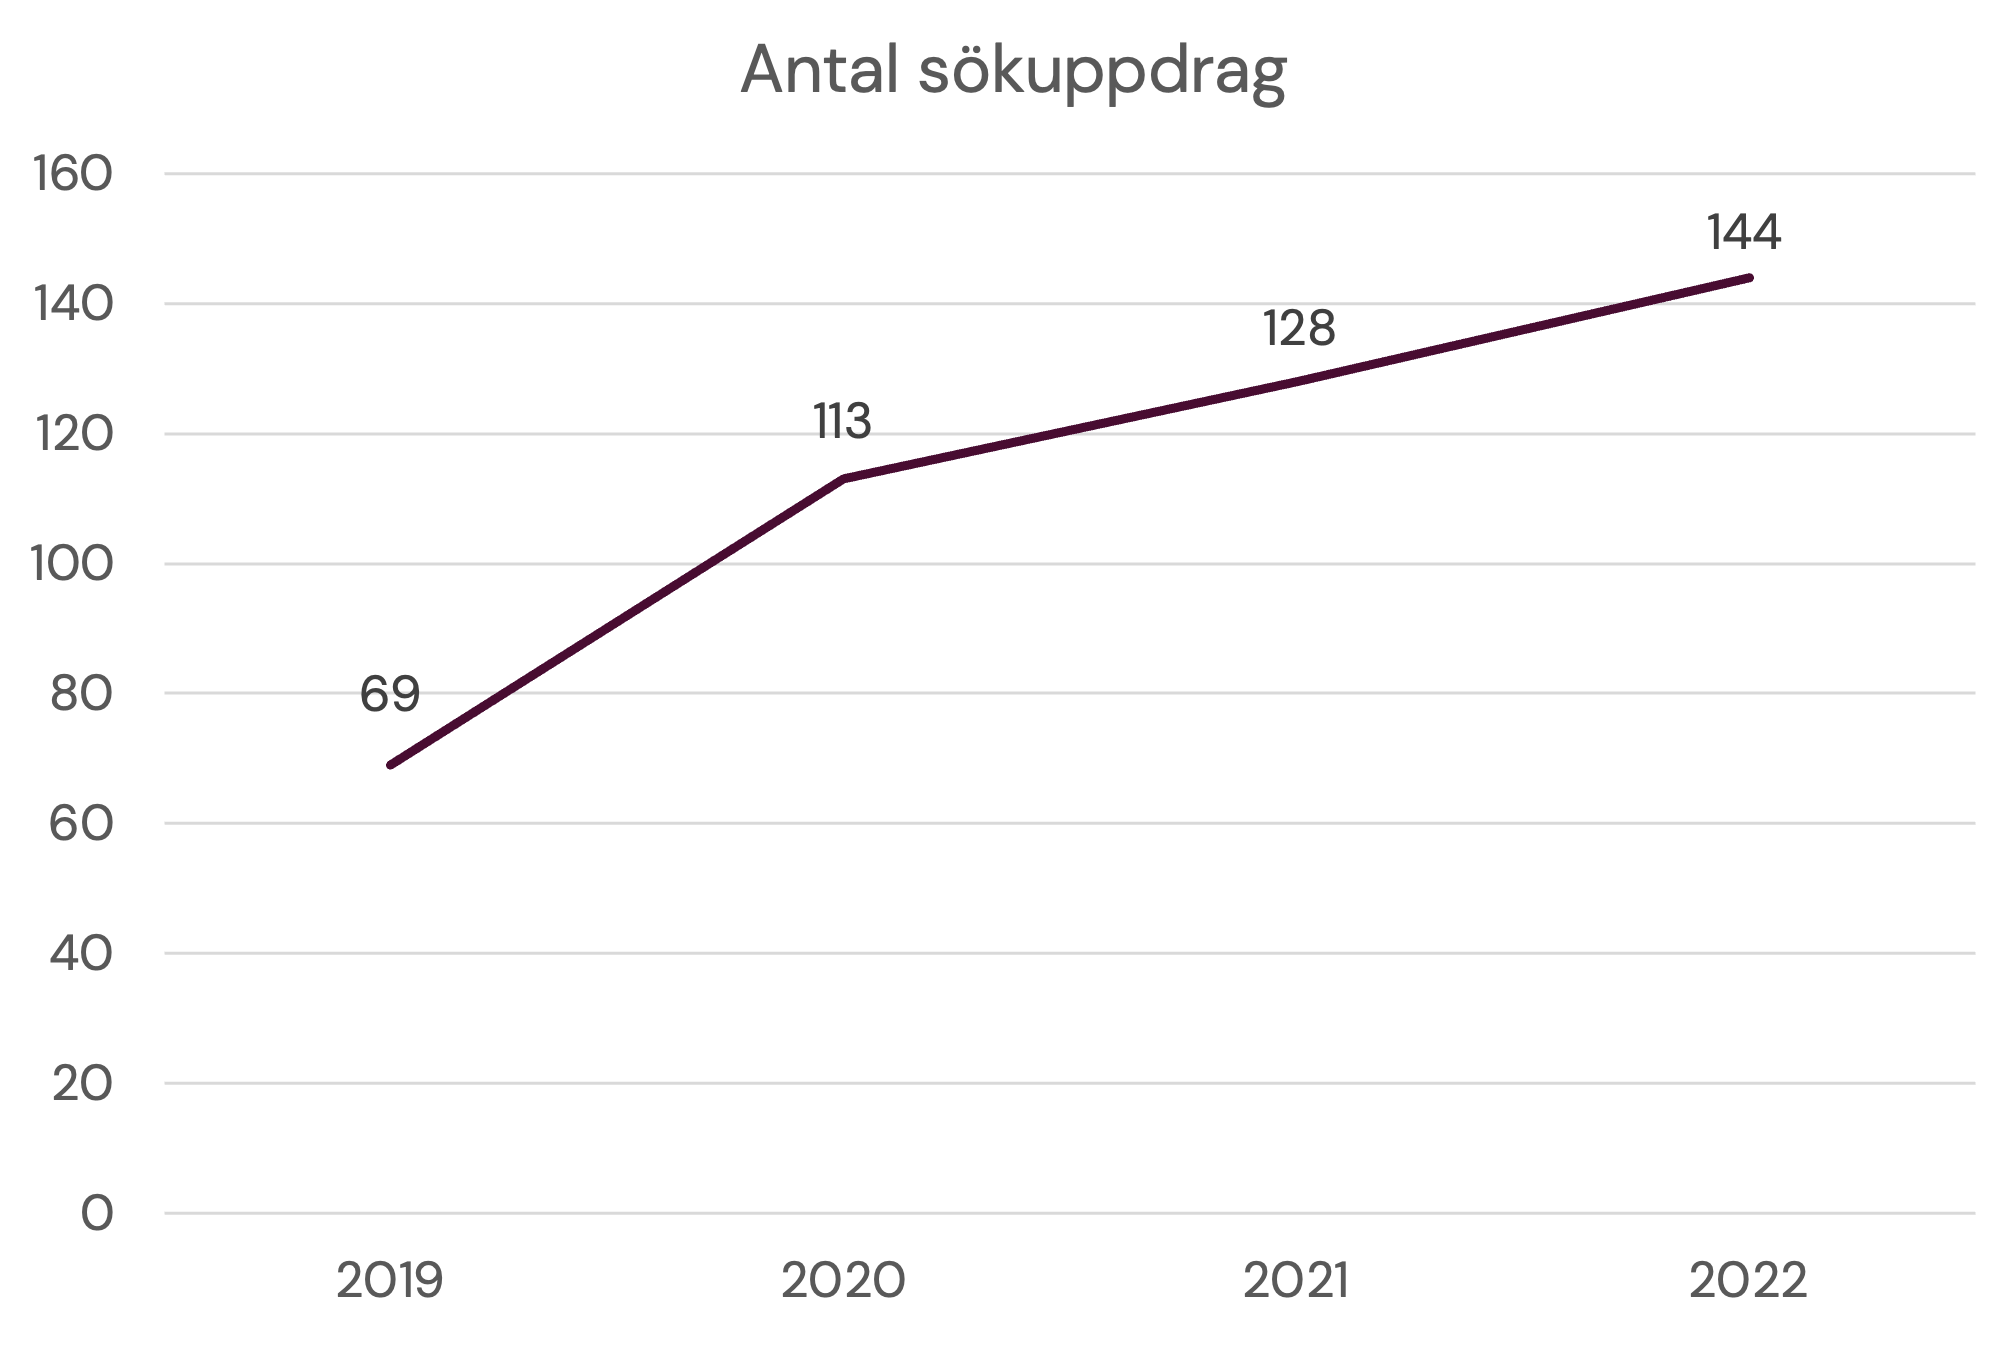 Antal sökuppdrag KIB: 2019 69, 2020 113, 2021, 128, 2022 144.